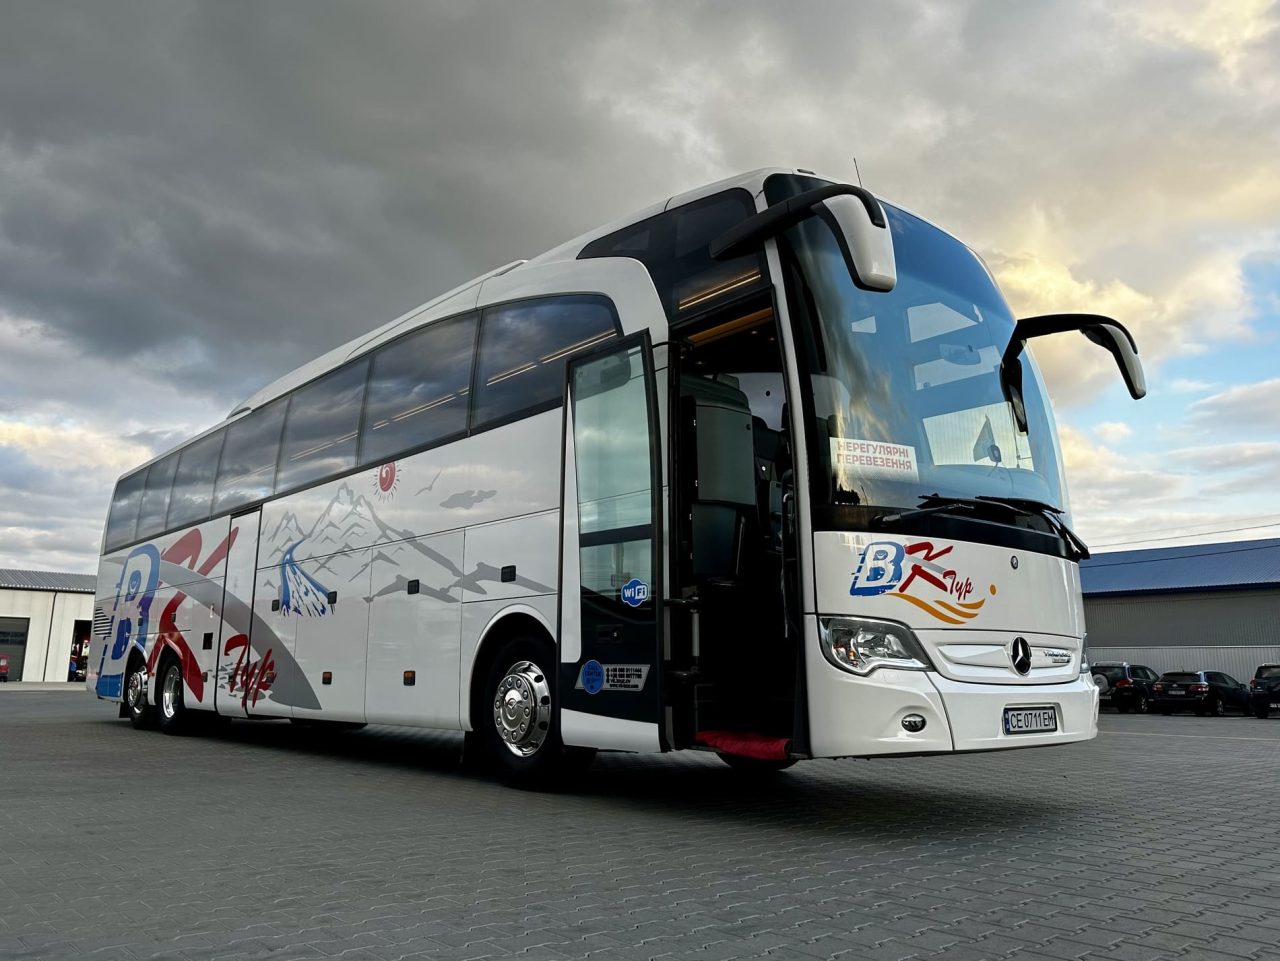 vk-tour-bus- (2)